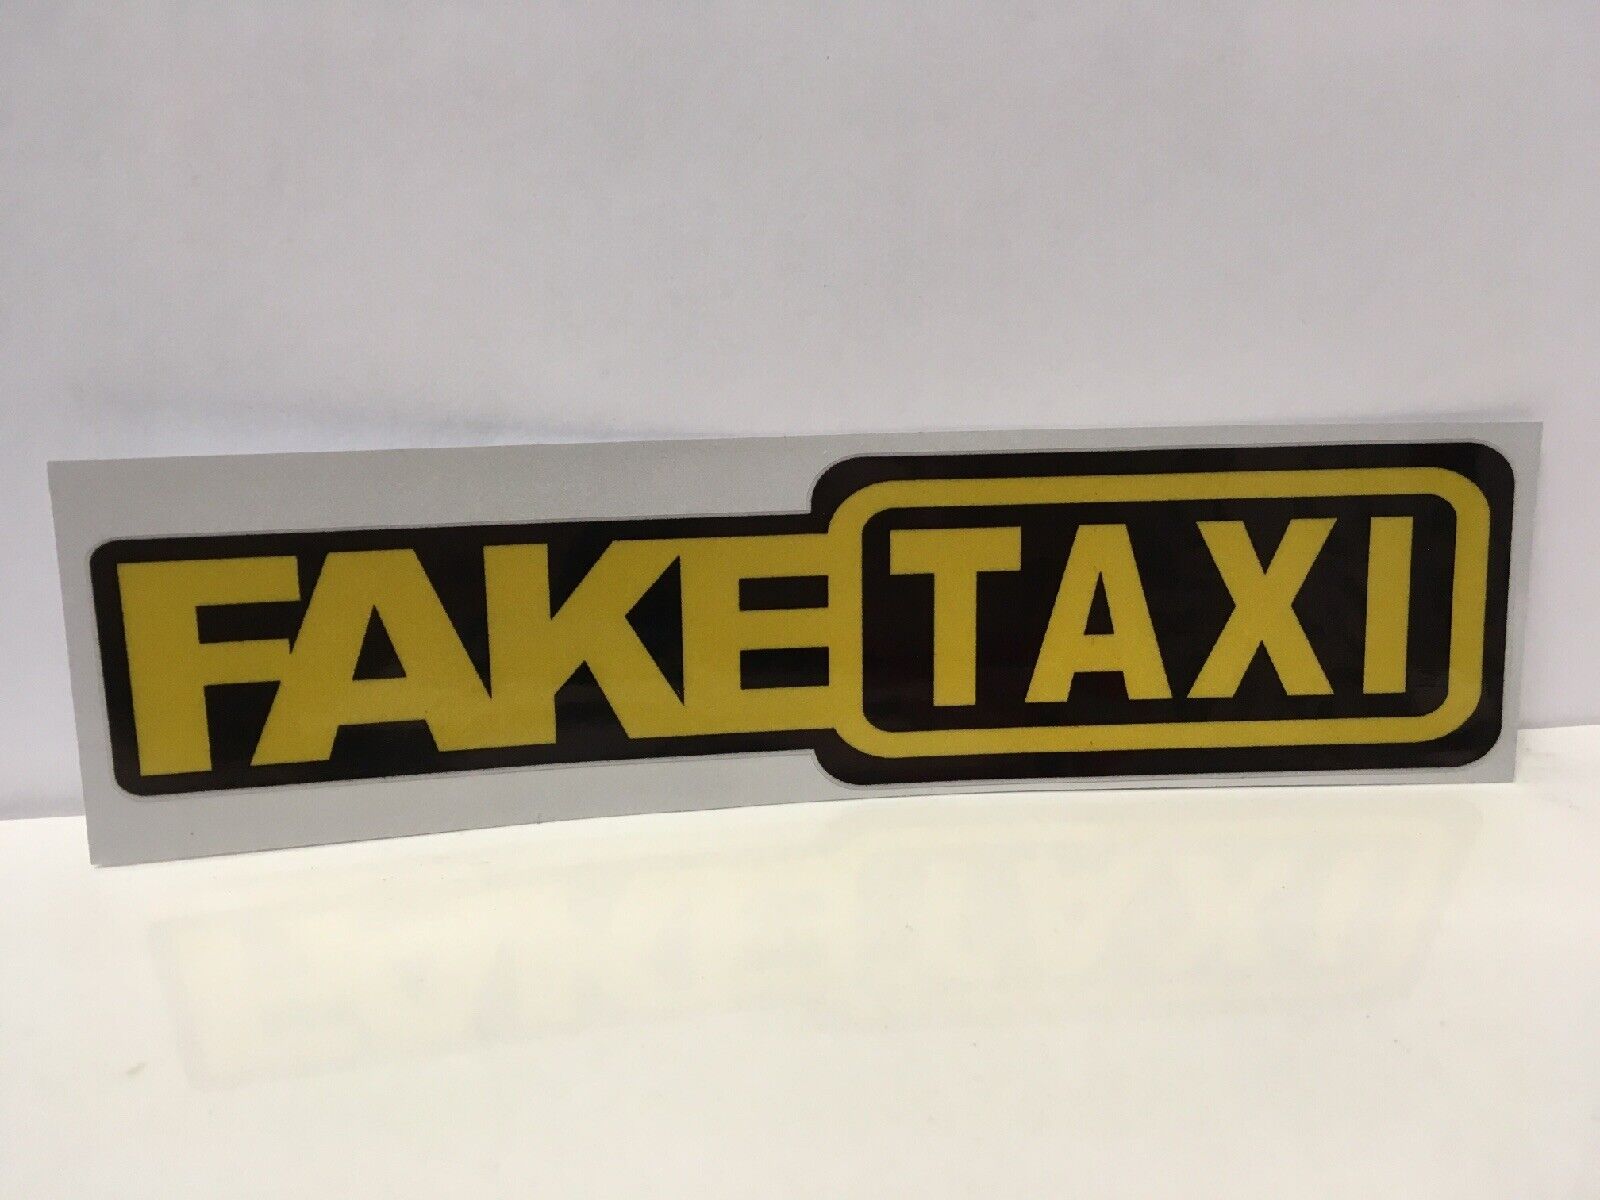 Faketaxi Fake Taxi Sticker 8 Inches